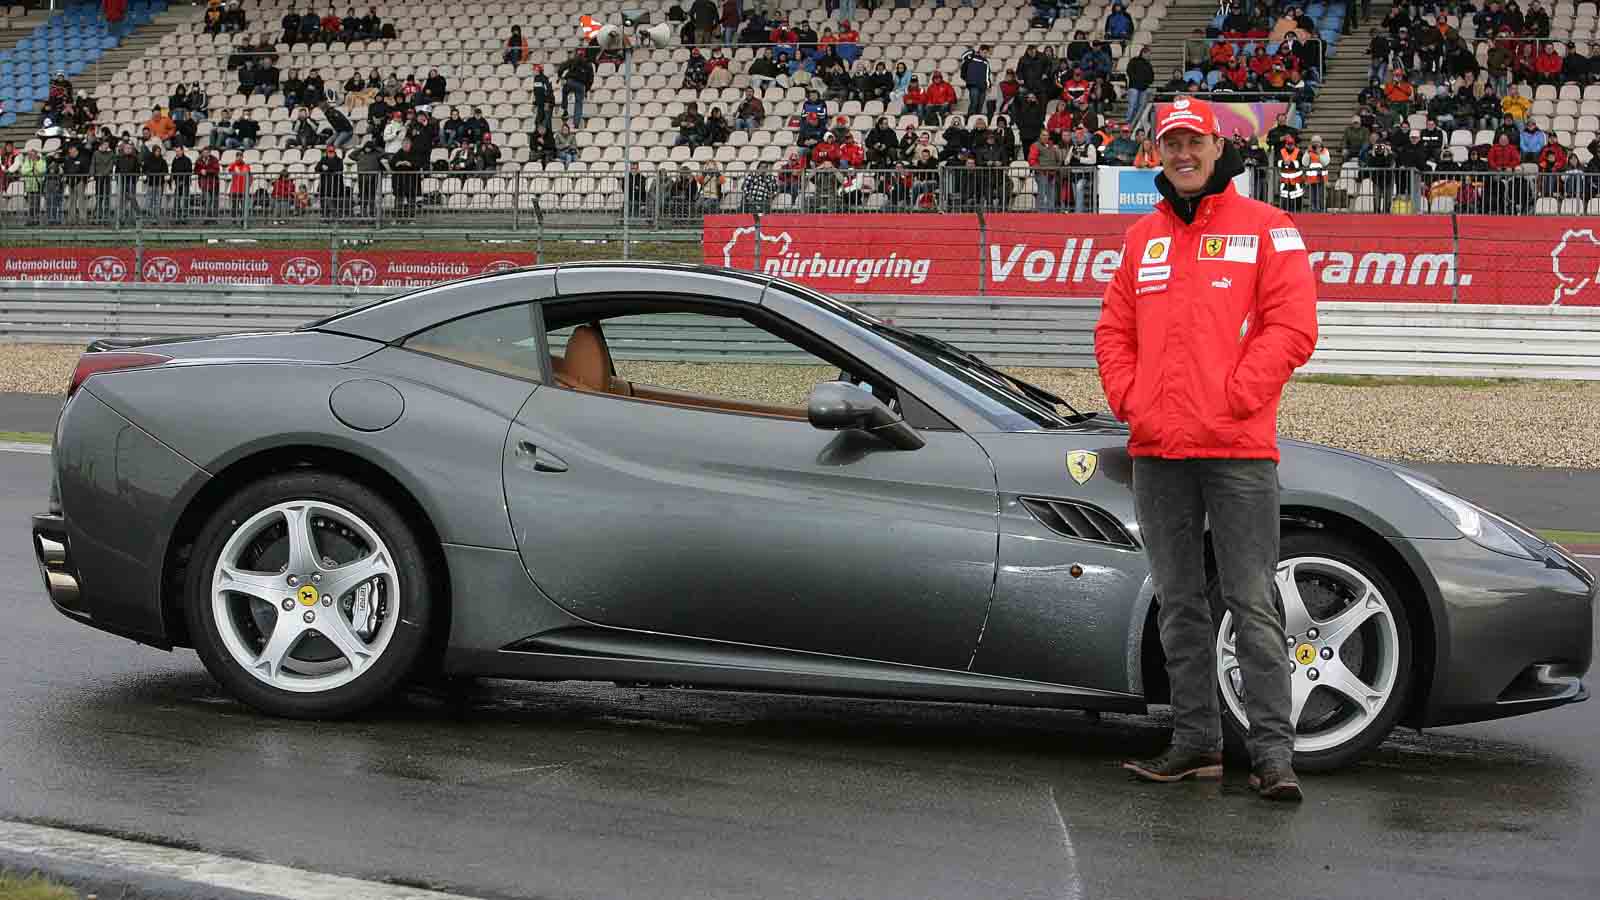 Michael Schumacher launches the Ferrari California. Nurburgring 2008.